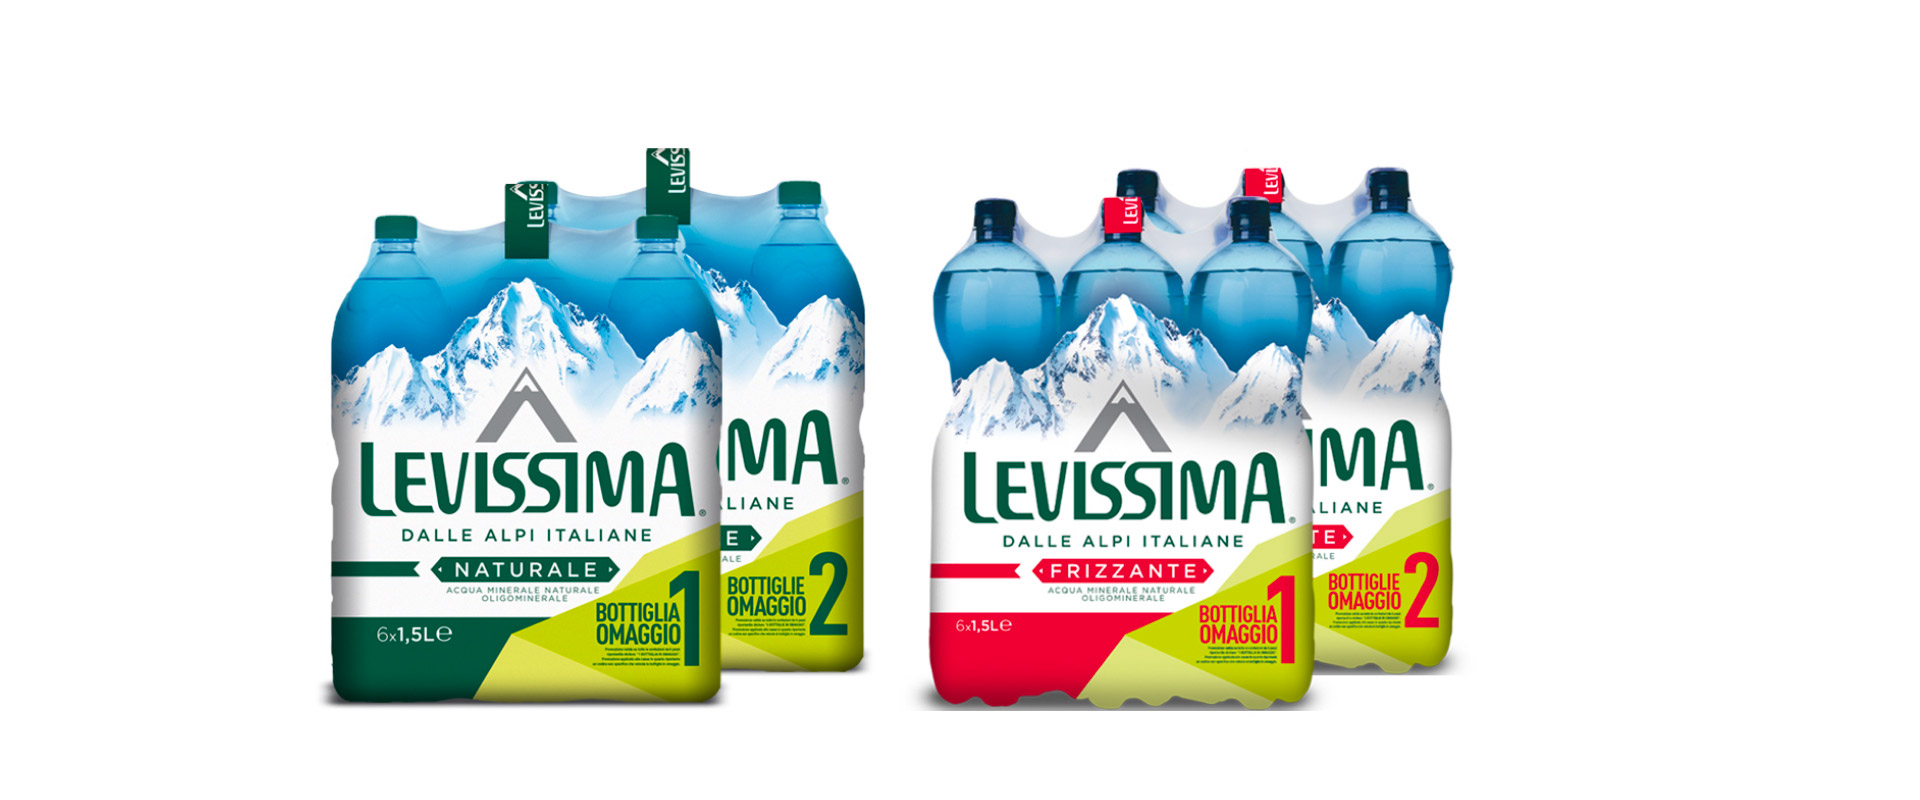 Levissima promotional pack